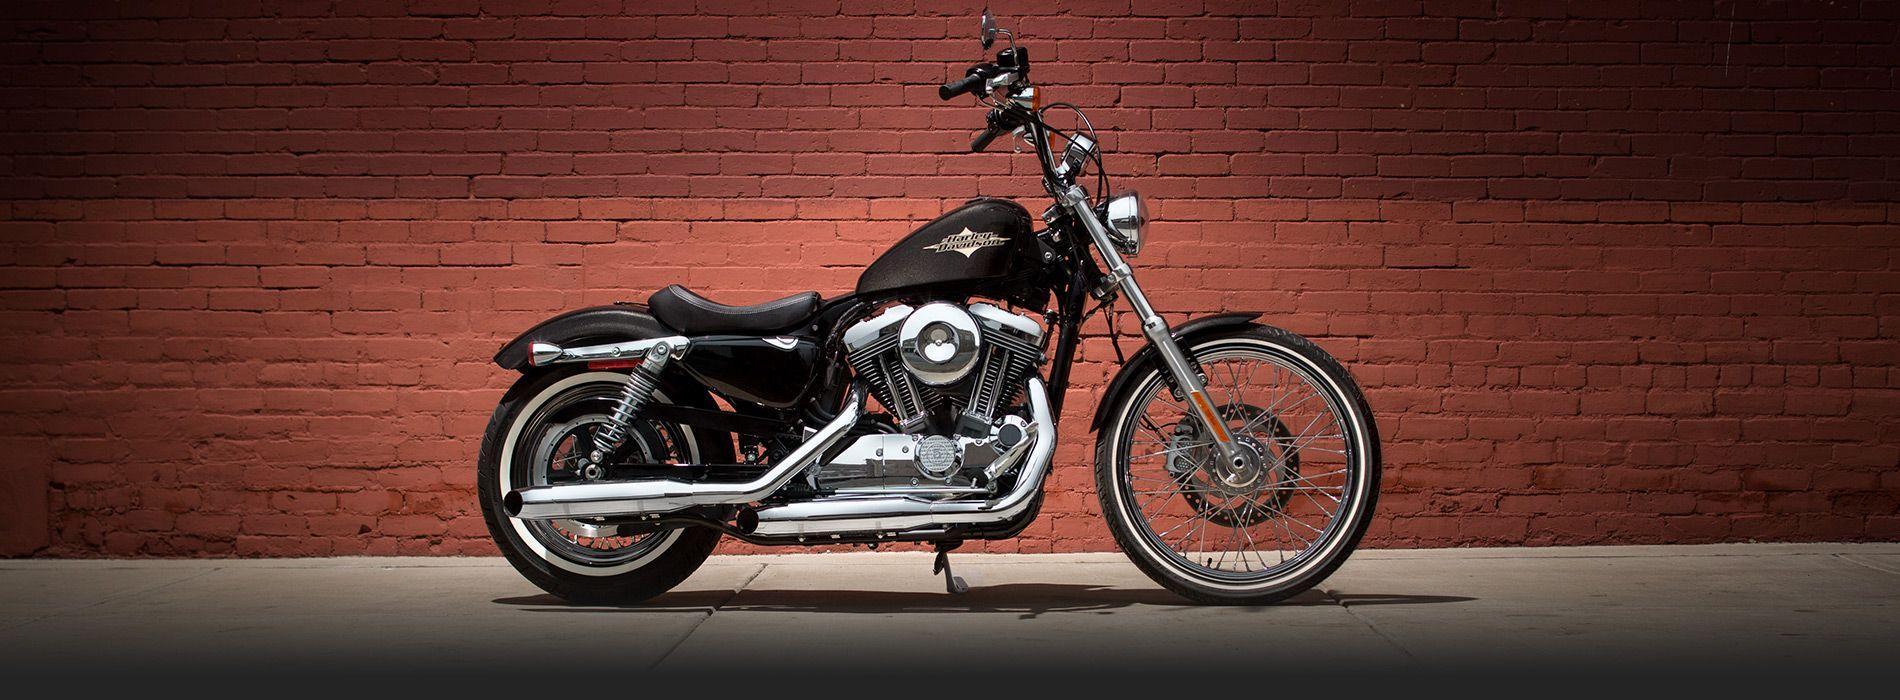 Sportster Seventy Two. Harley Davidson USA